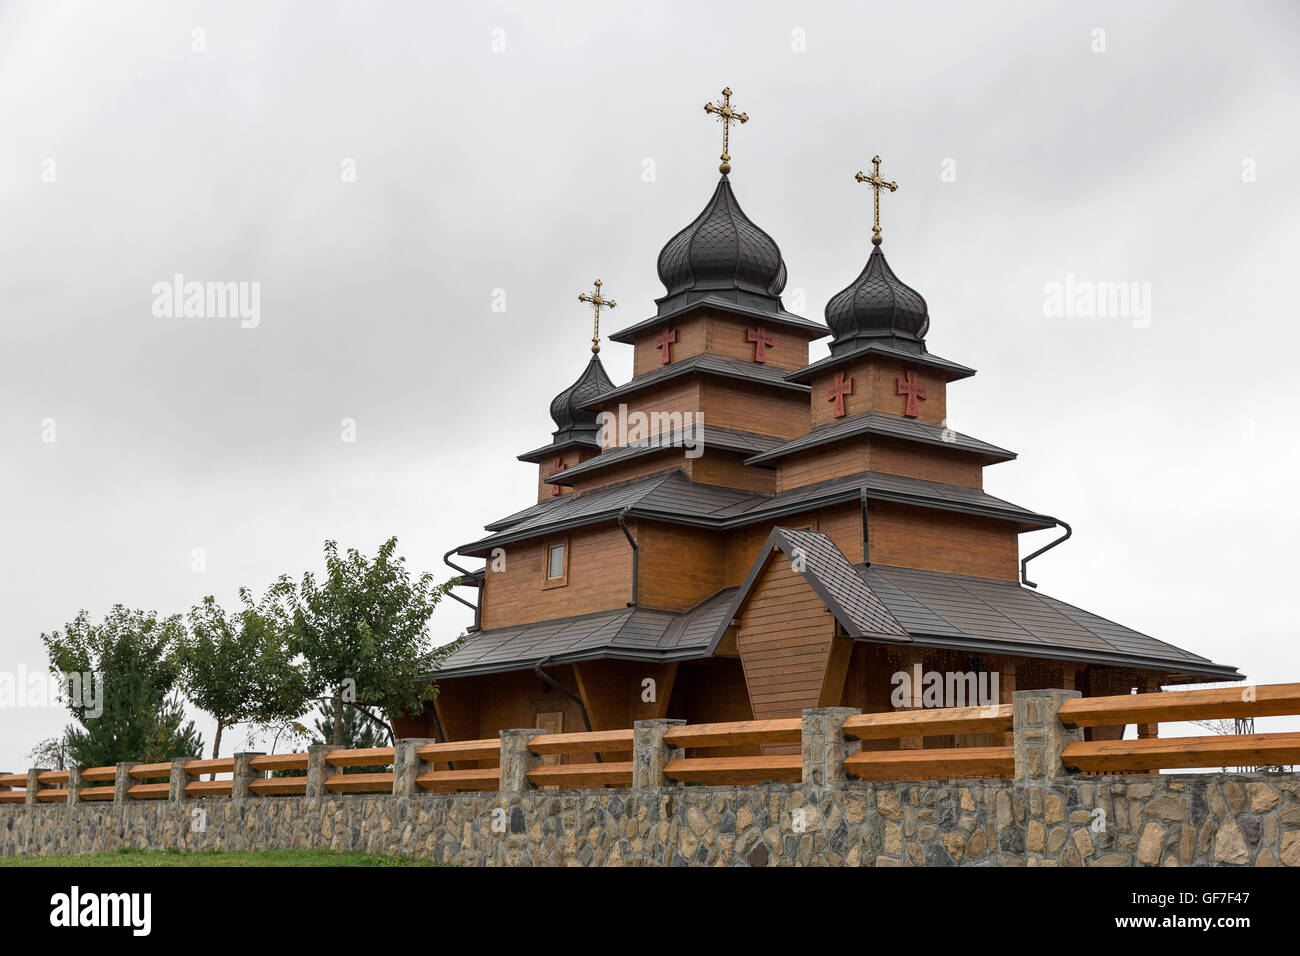 alte traditionelle hölzerne Kirche in Karpaten Region, Westukraine, Europa Stockfoto